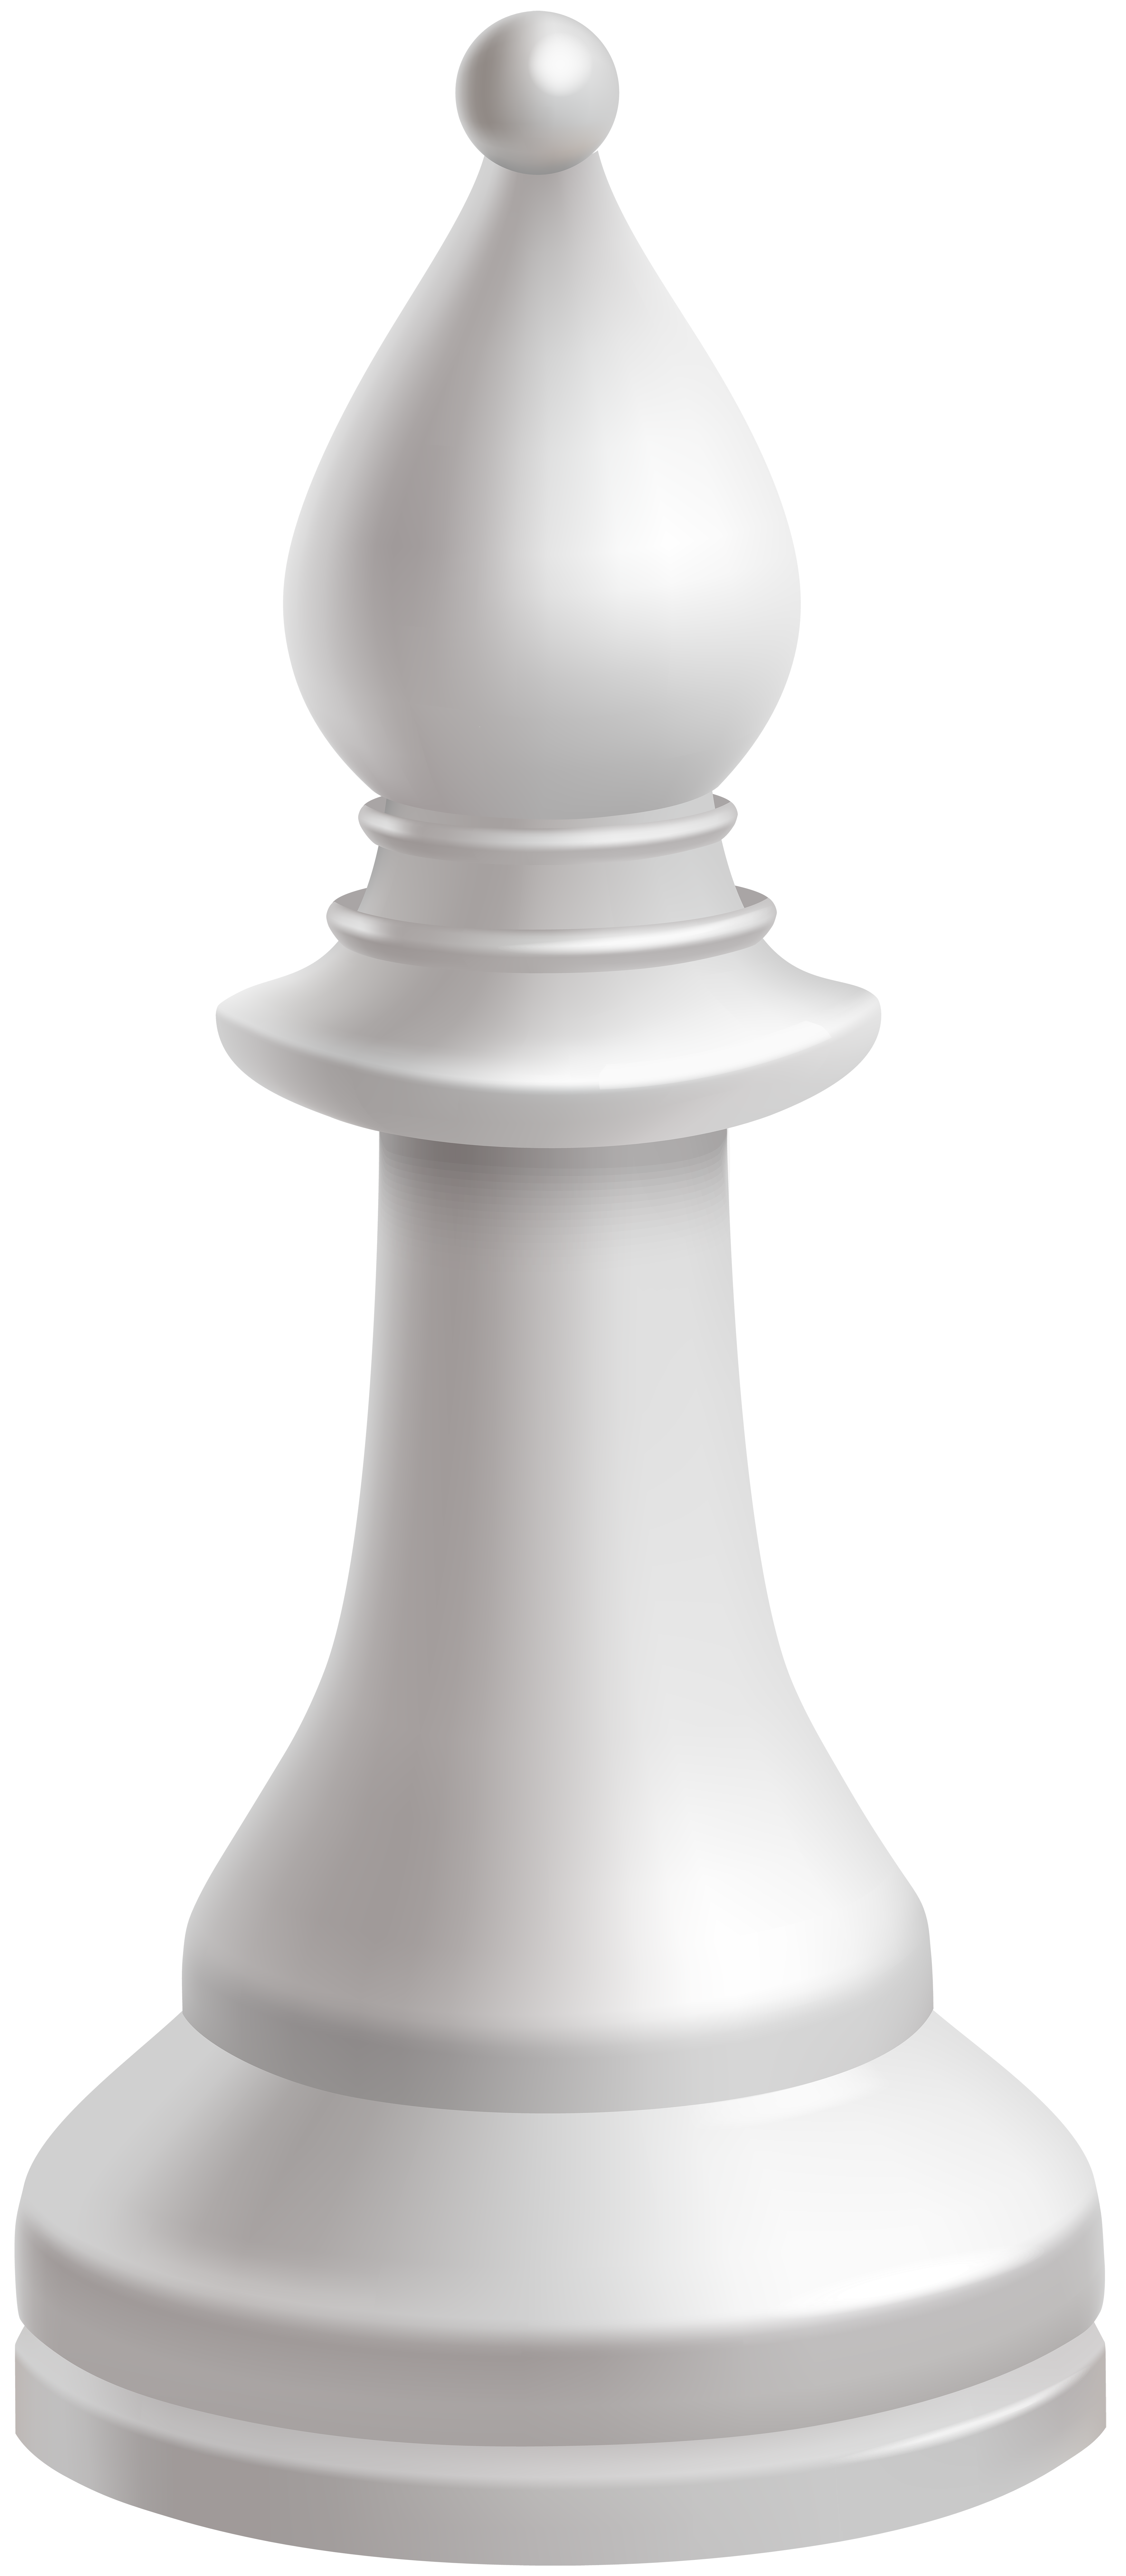 Bishop white chess.